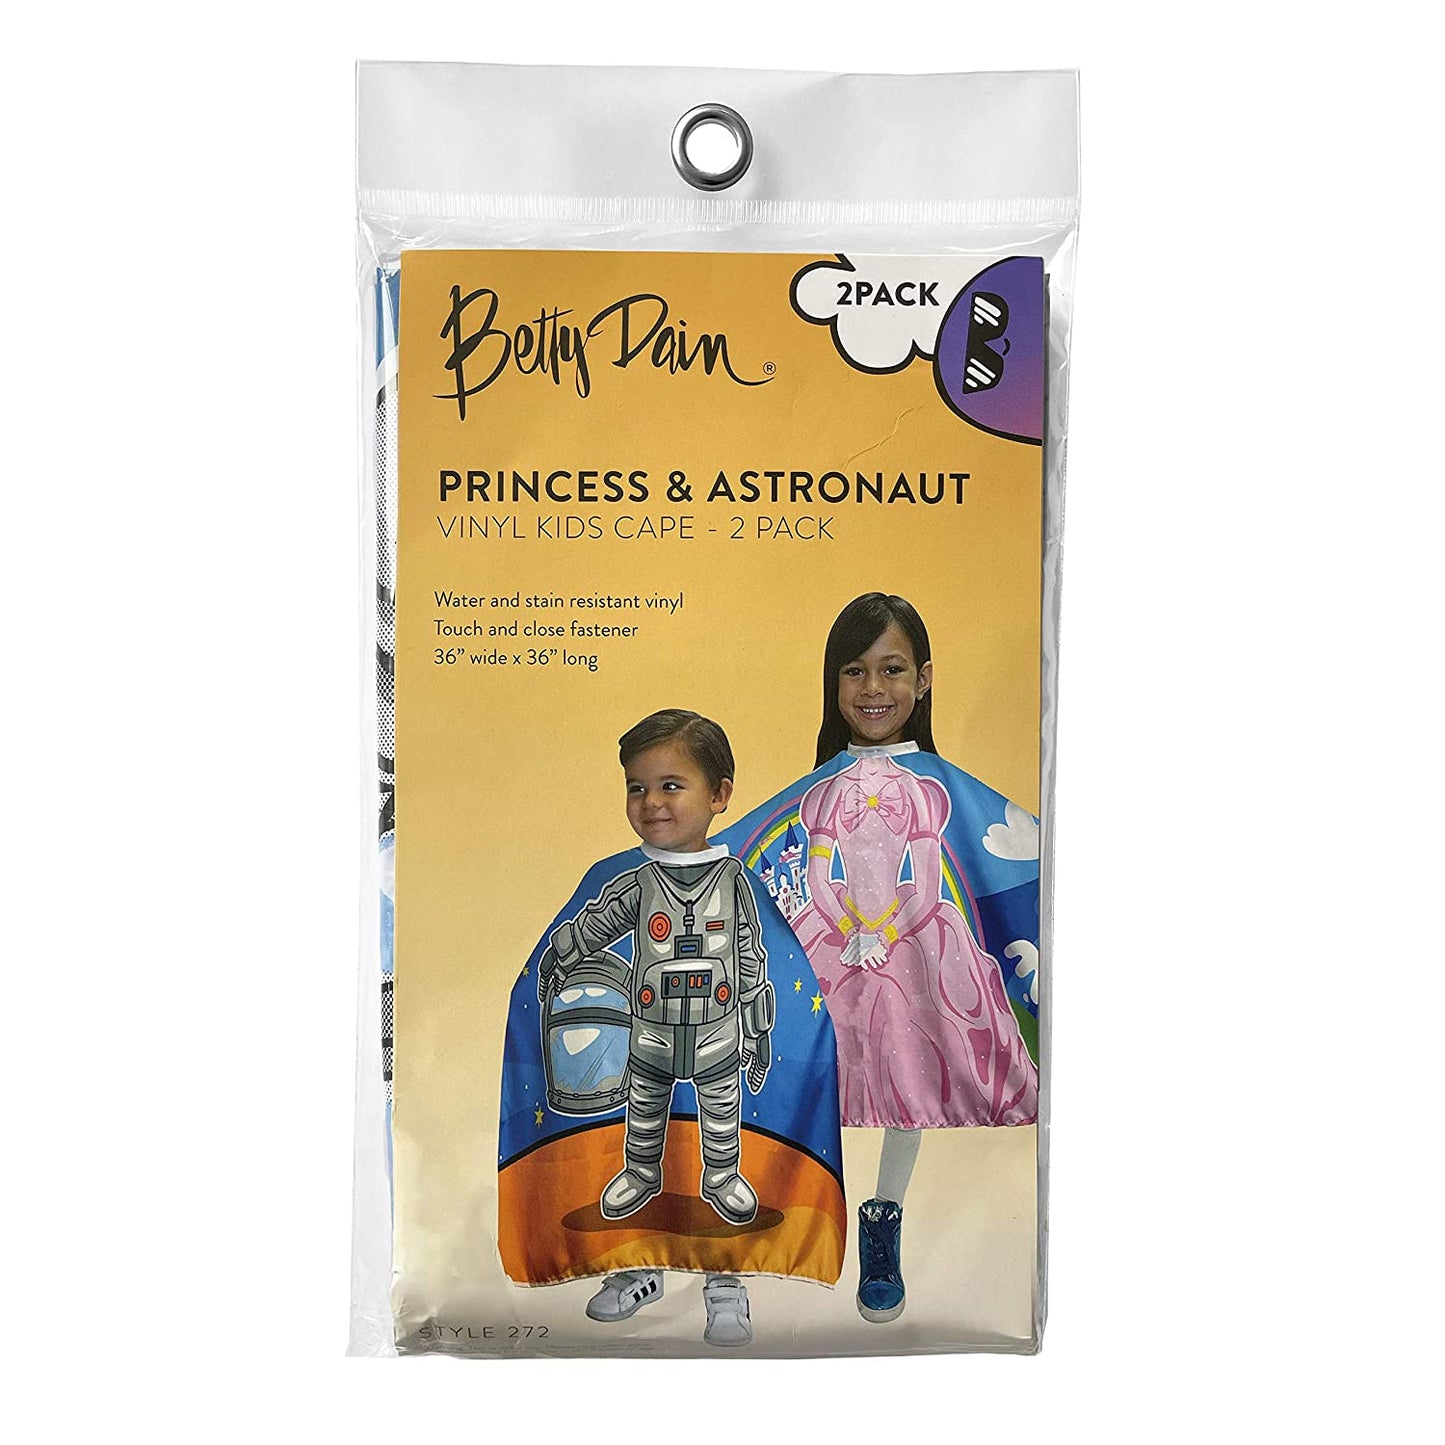 Princess & Astronaut Vinyl Kid's Capes | 2 Pack | STYLR 272 | BETTY DAIN - SH Salons